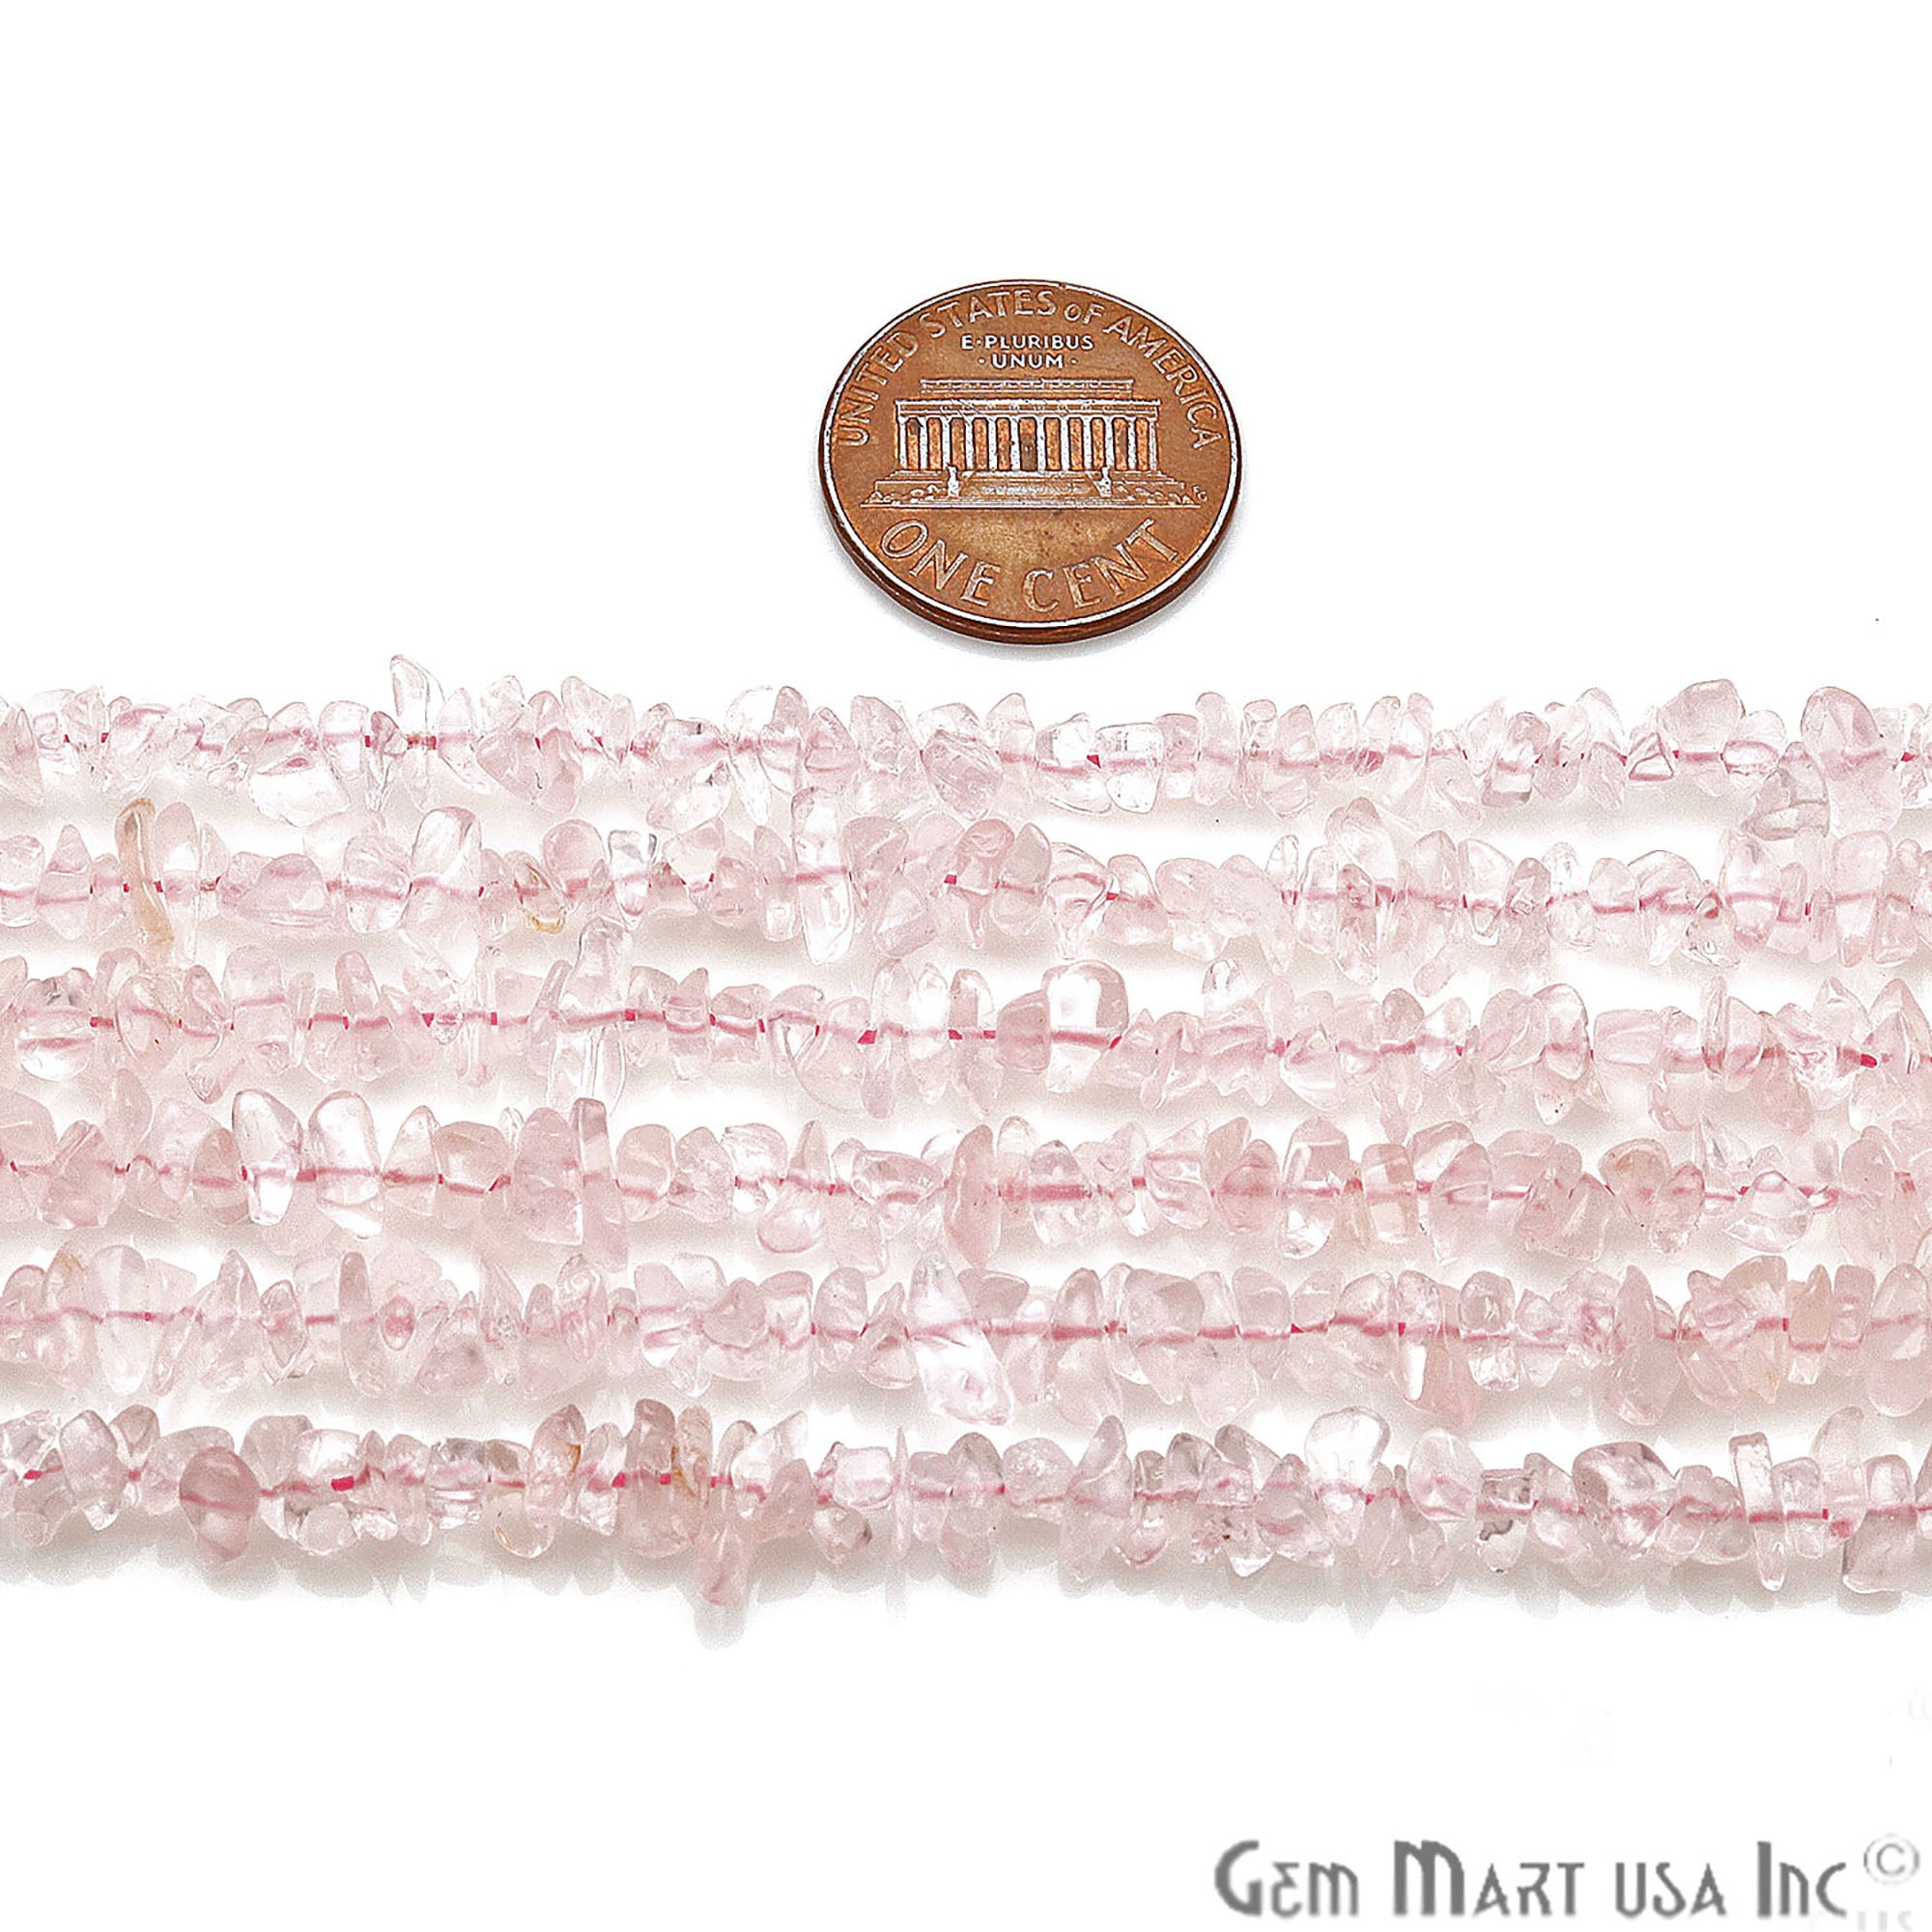 Natural Rose Quartz Chip Nugget Beads 34 inch Full Strand Jewelry Making Supply (CHRQ-70001) - GemMartUSA (762225197103)